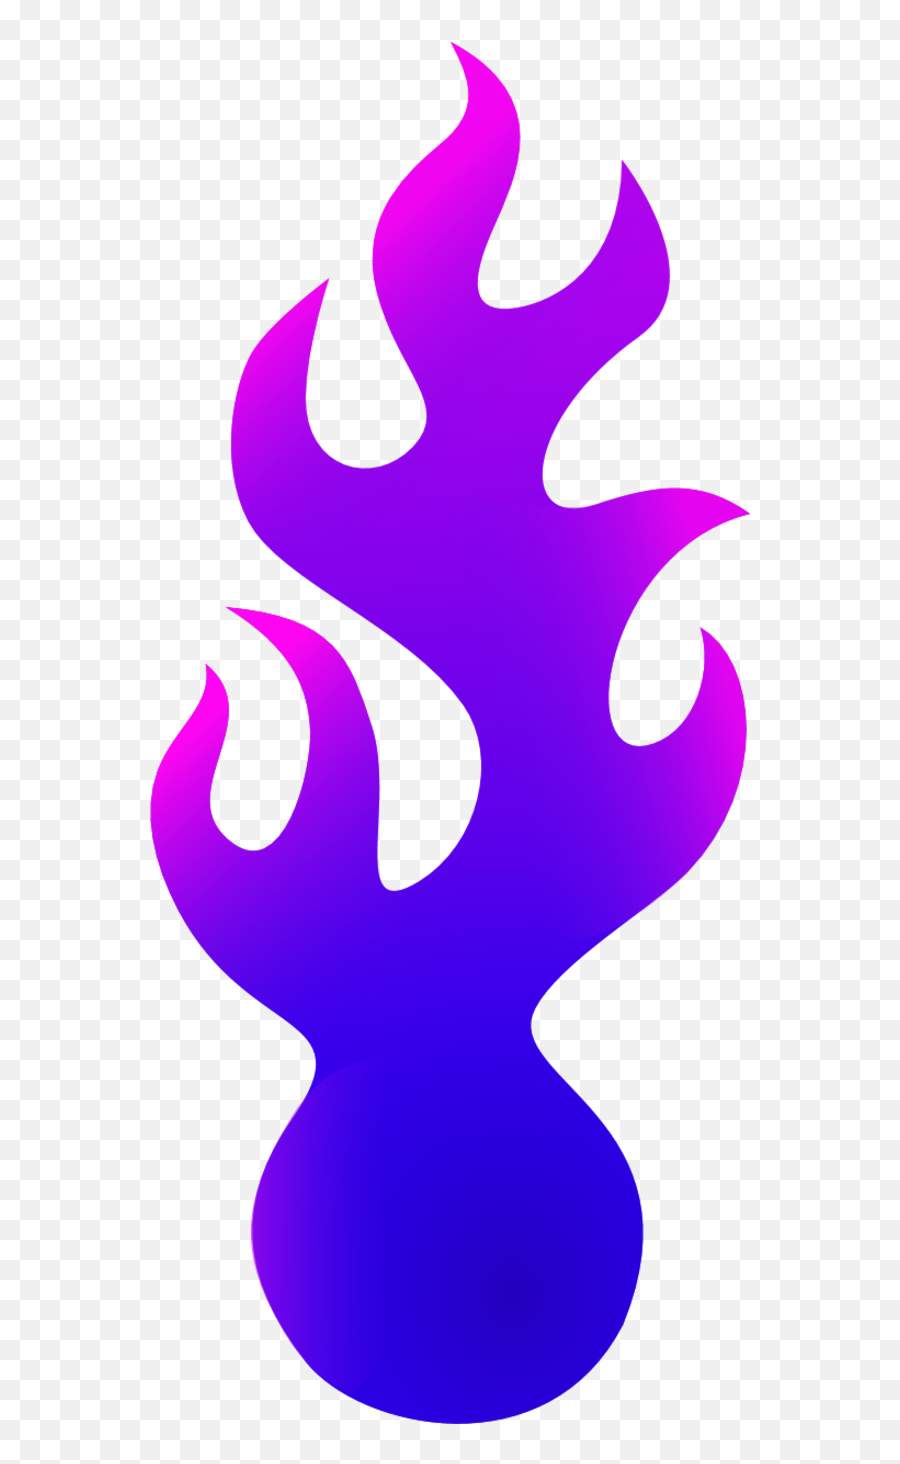 Clipart Of The Purple Fireball Free Image Download Emoji,Fireball Png Transparent